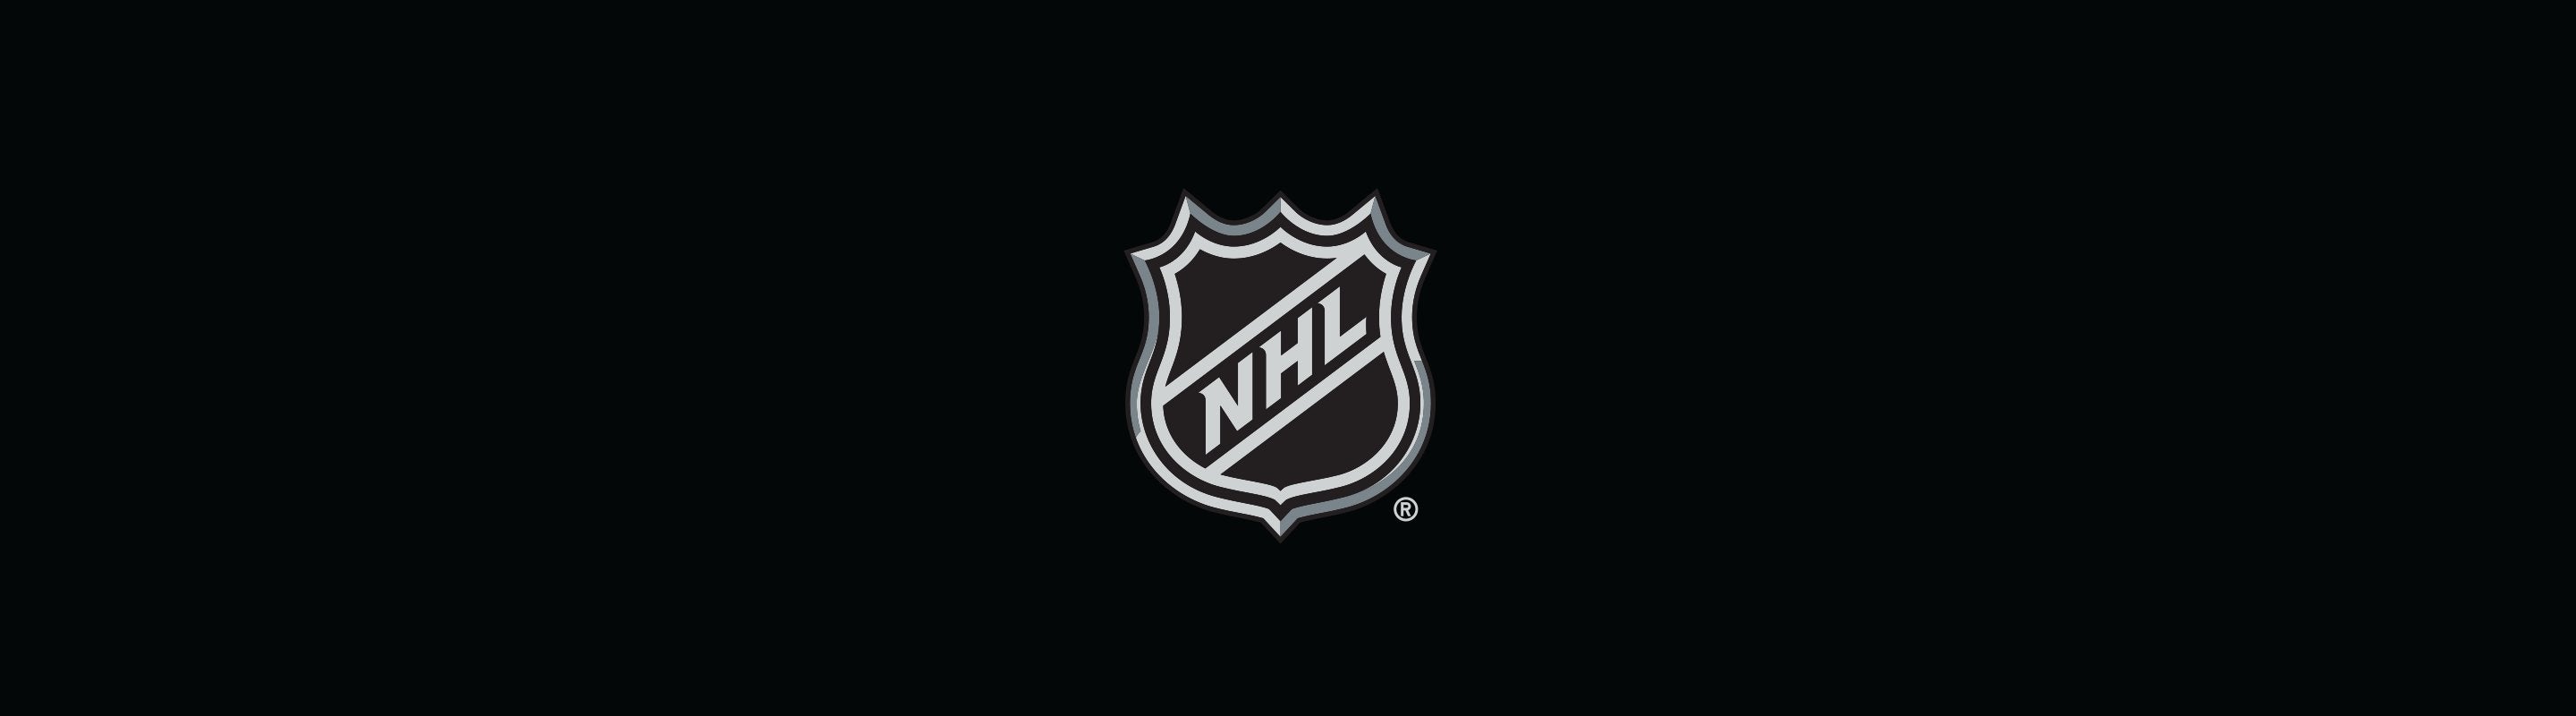  Sleep Squad Buffalo Sabres Goat Head Logo 60” x 80” Raschel  Plush Blanket – an NHL Super-Soft Throw : Sports & Outdoors